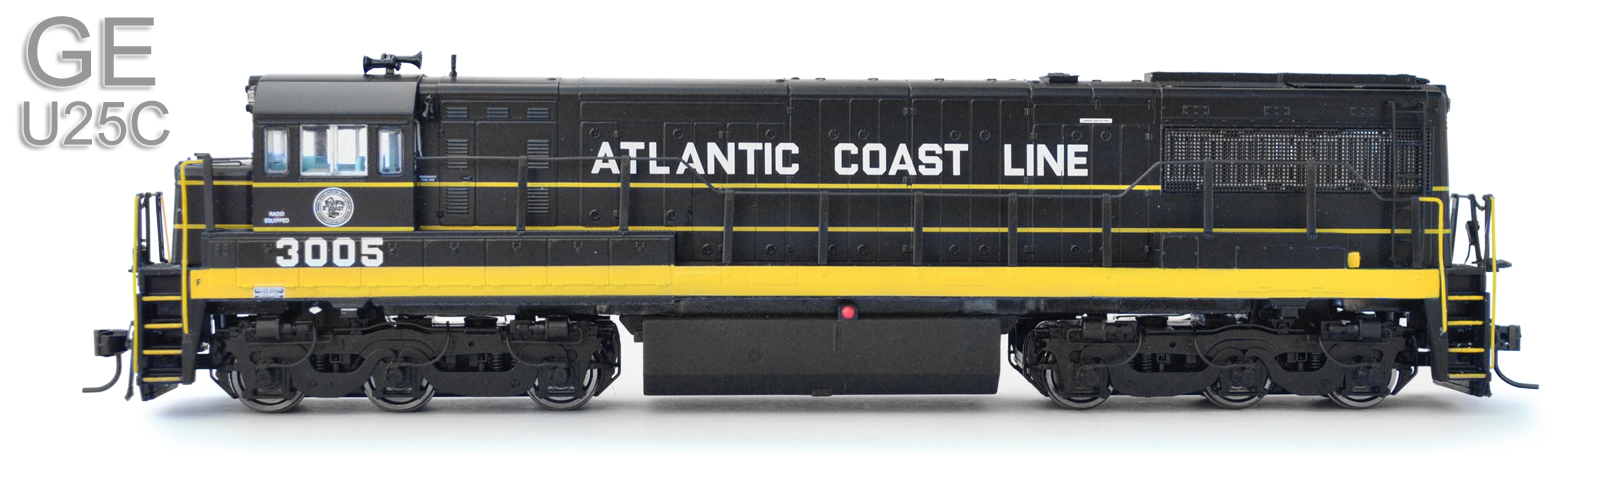 Atlantic Coast Line (Coming Soon): 3005, 3009